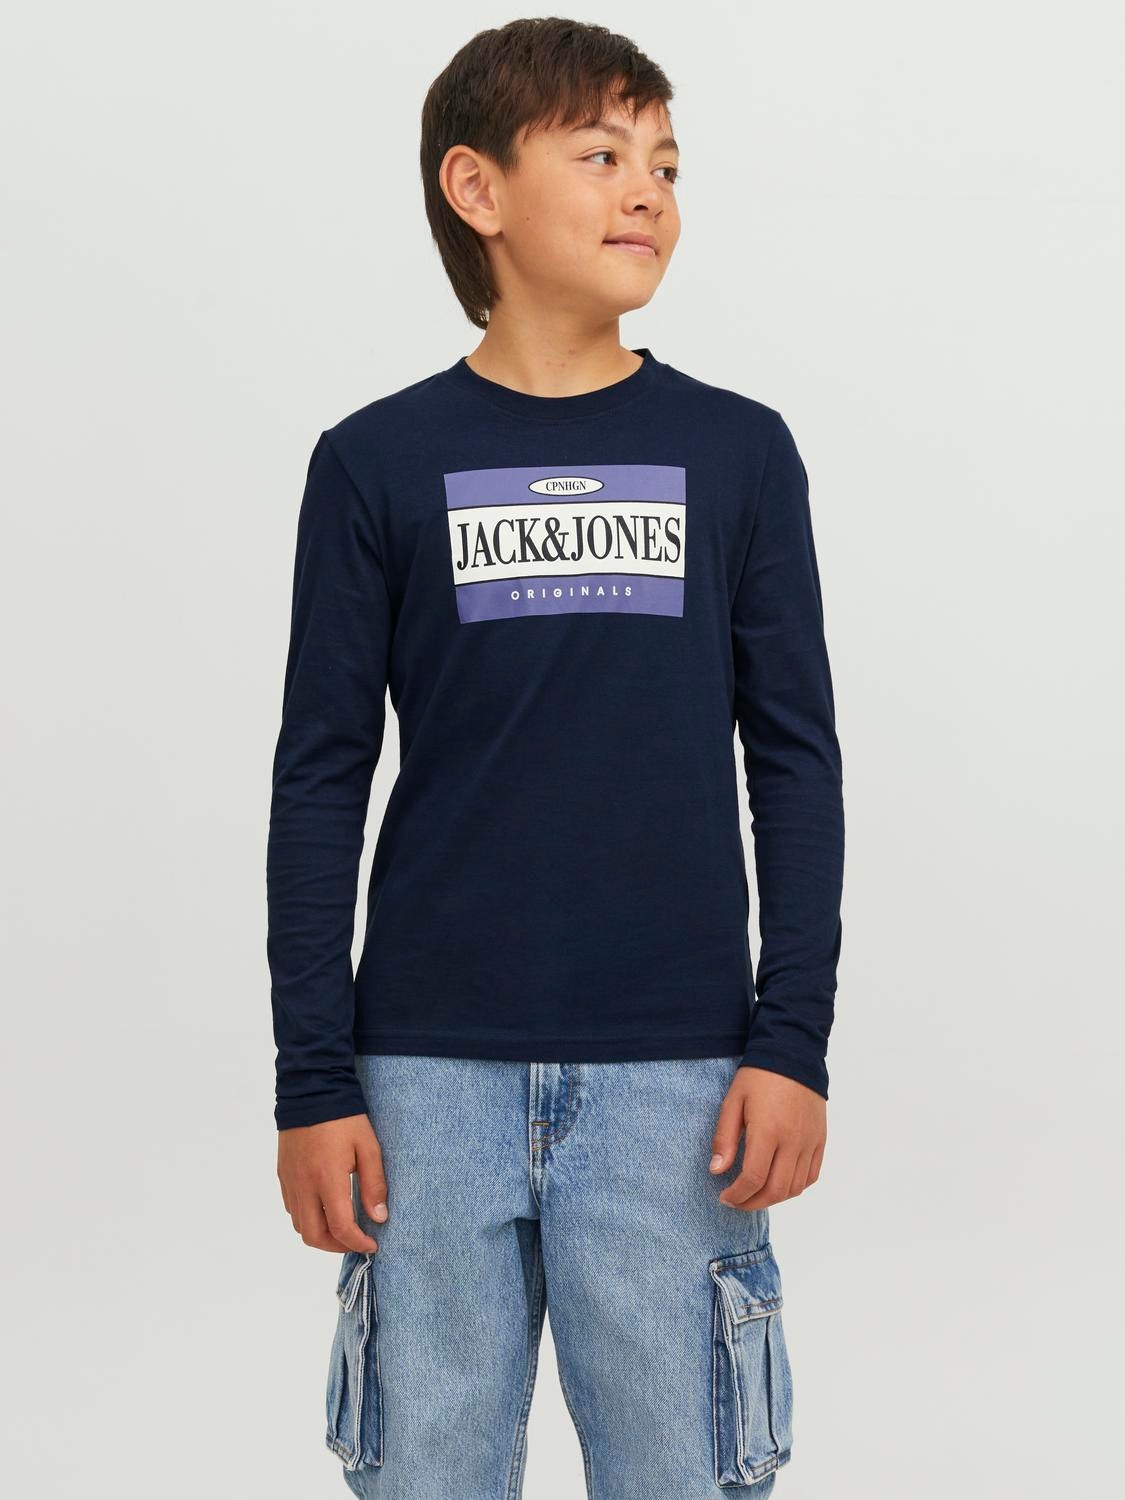 Jack & Jones Logo T-shirt For boys -Navy Blazer - 12242855